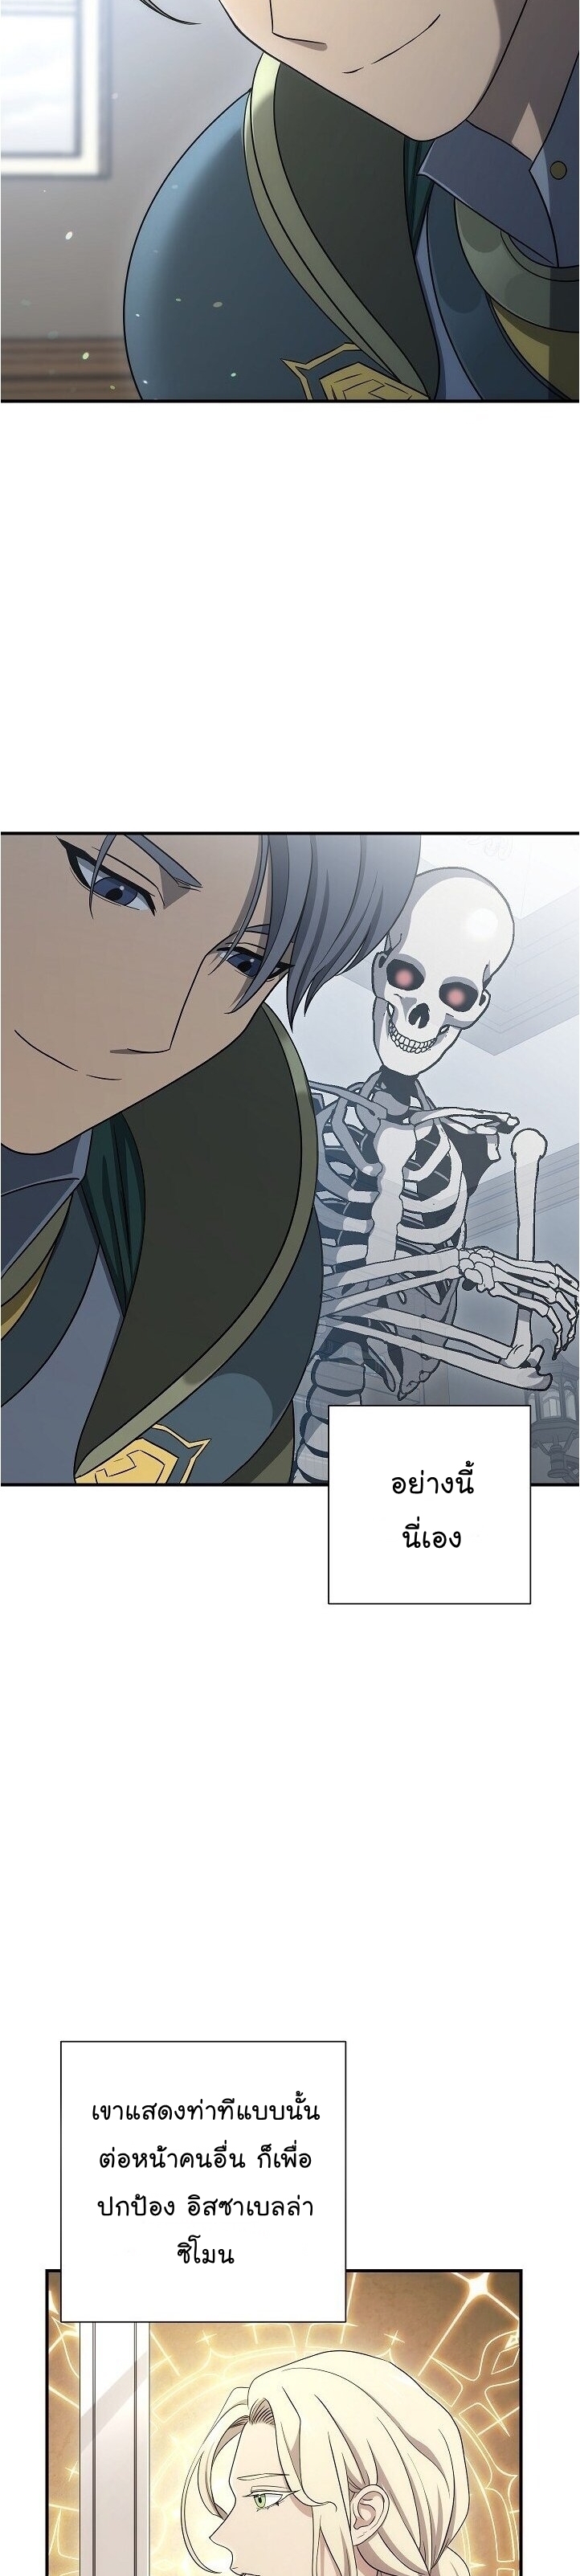 Skeleton Soldier 148 41